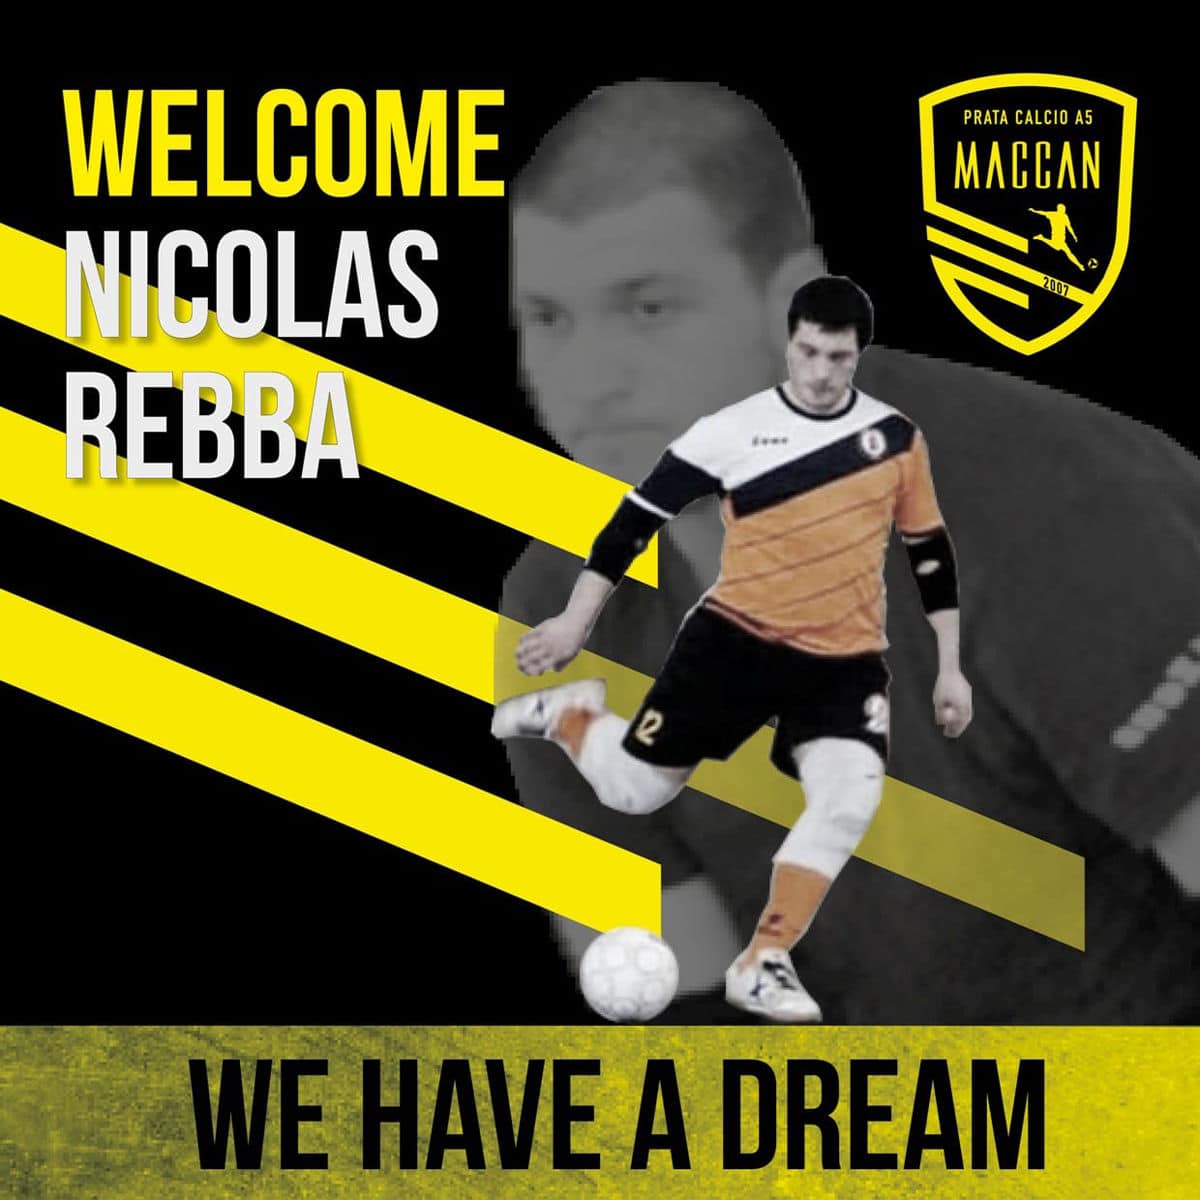 Nicolas Rebba